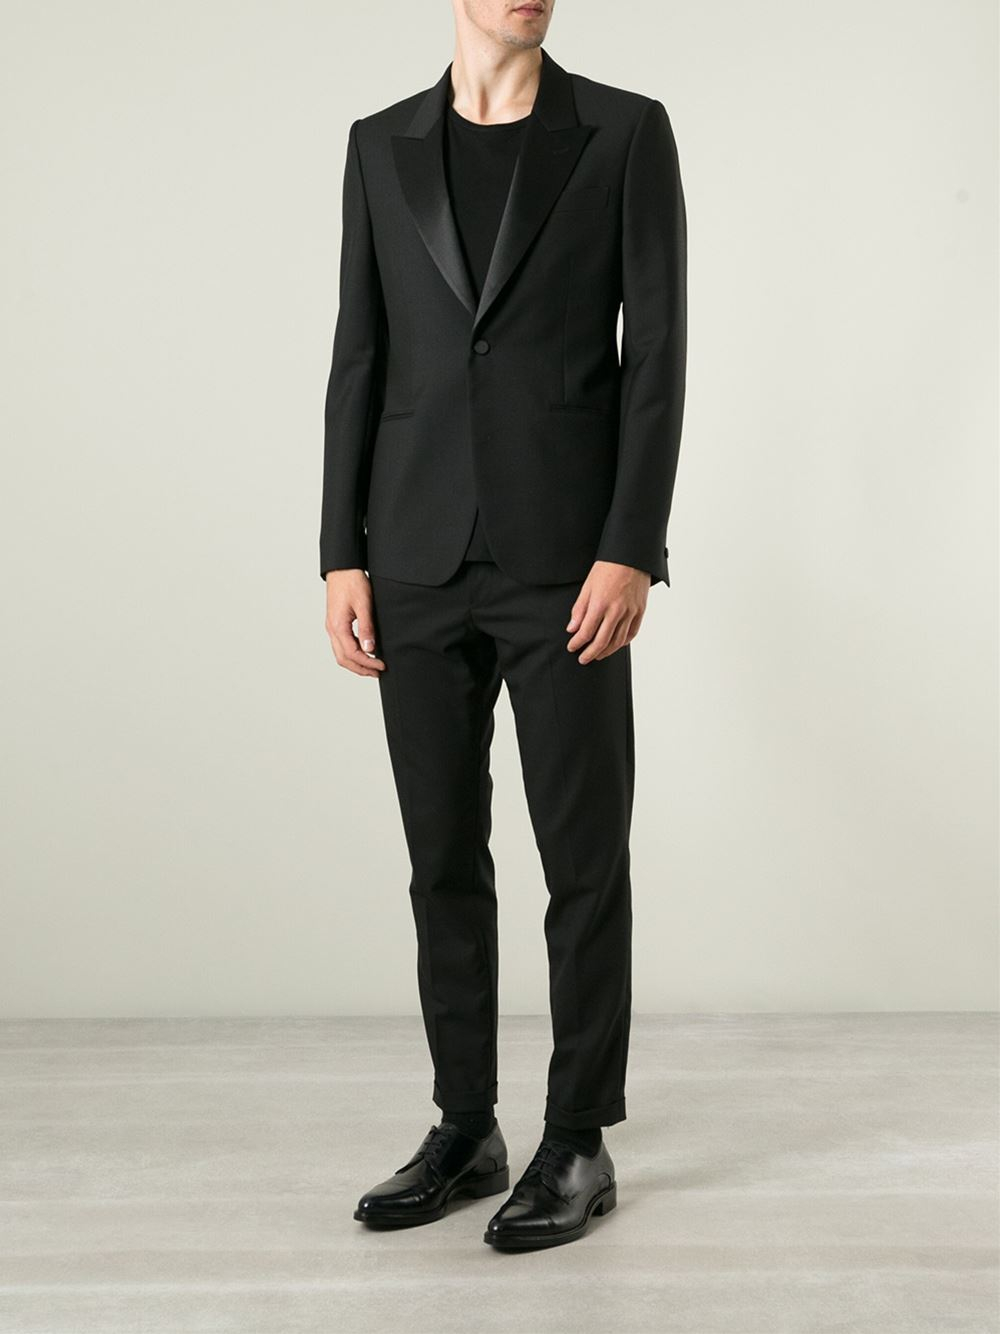 Alexander mcqueen Tailored Blazer in Black for Men | Lyst